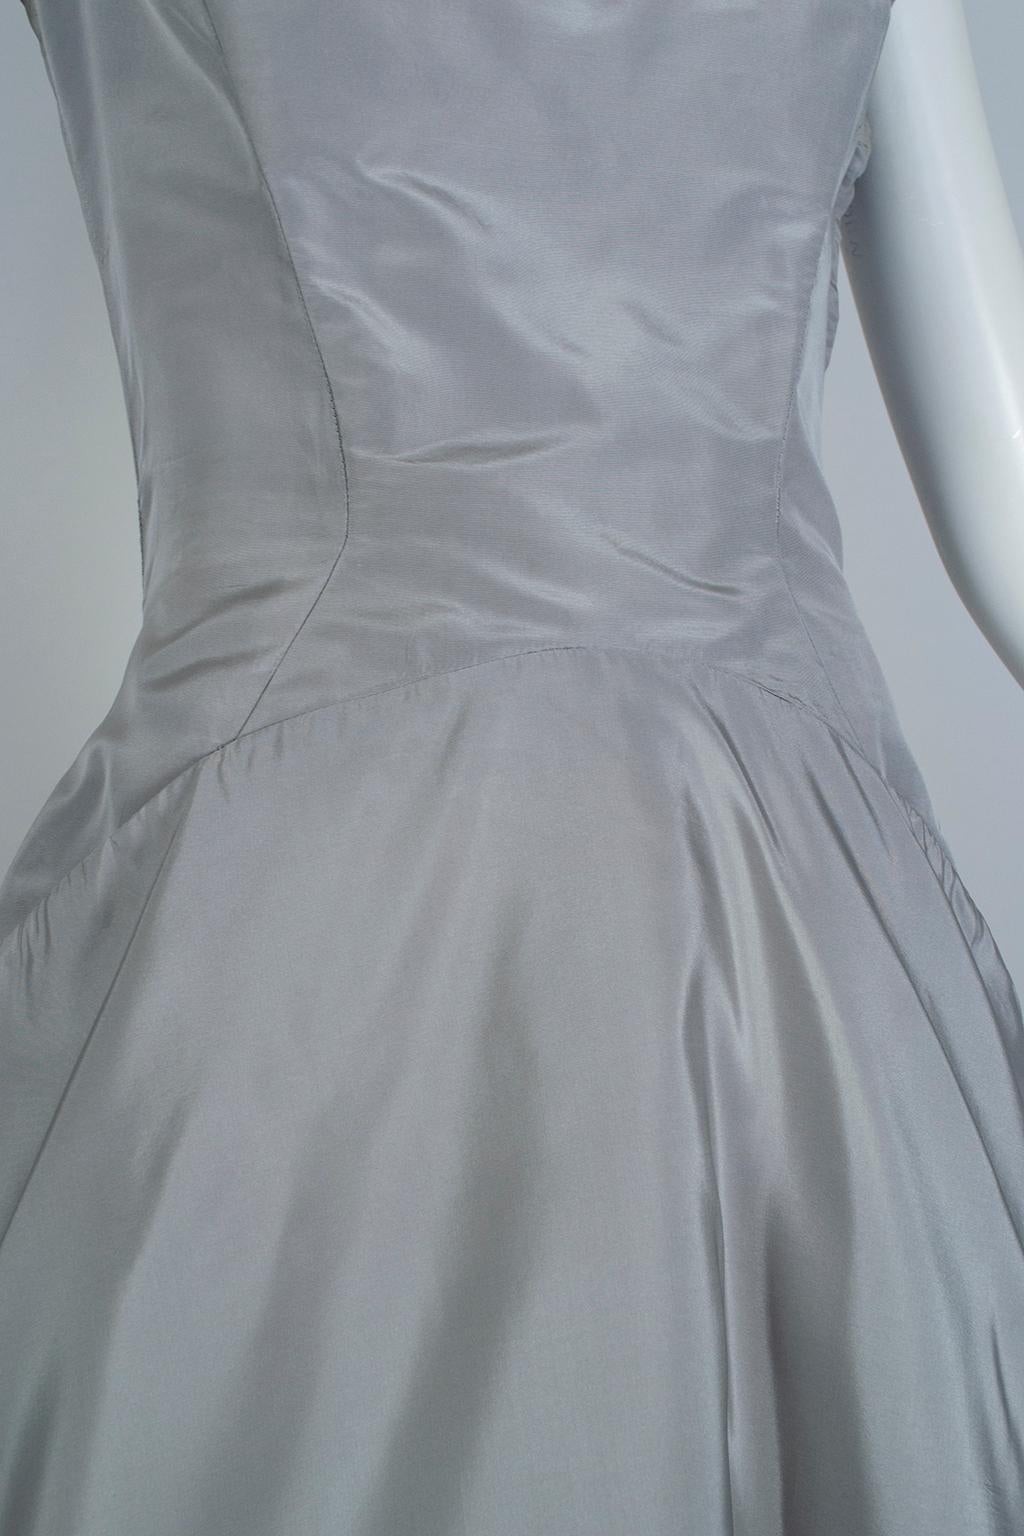 Werlé Beverly Hills Dove Gray Bib-Front Ballerina Dress - Medium, 1950s For Sale 1